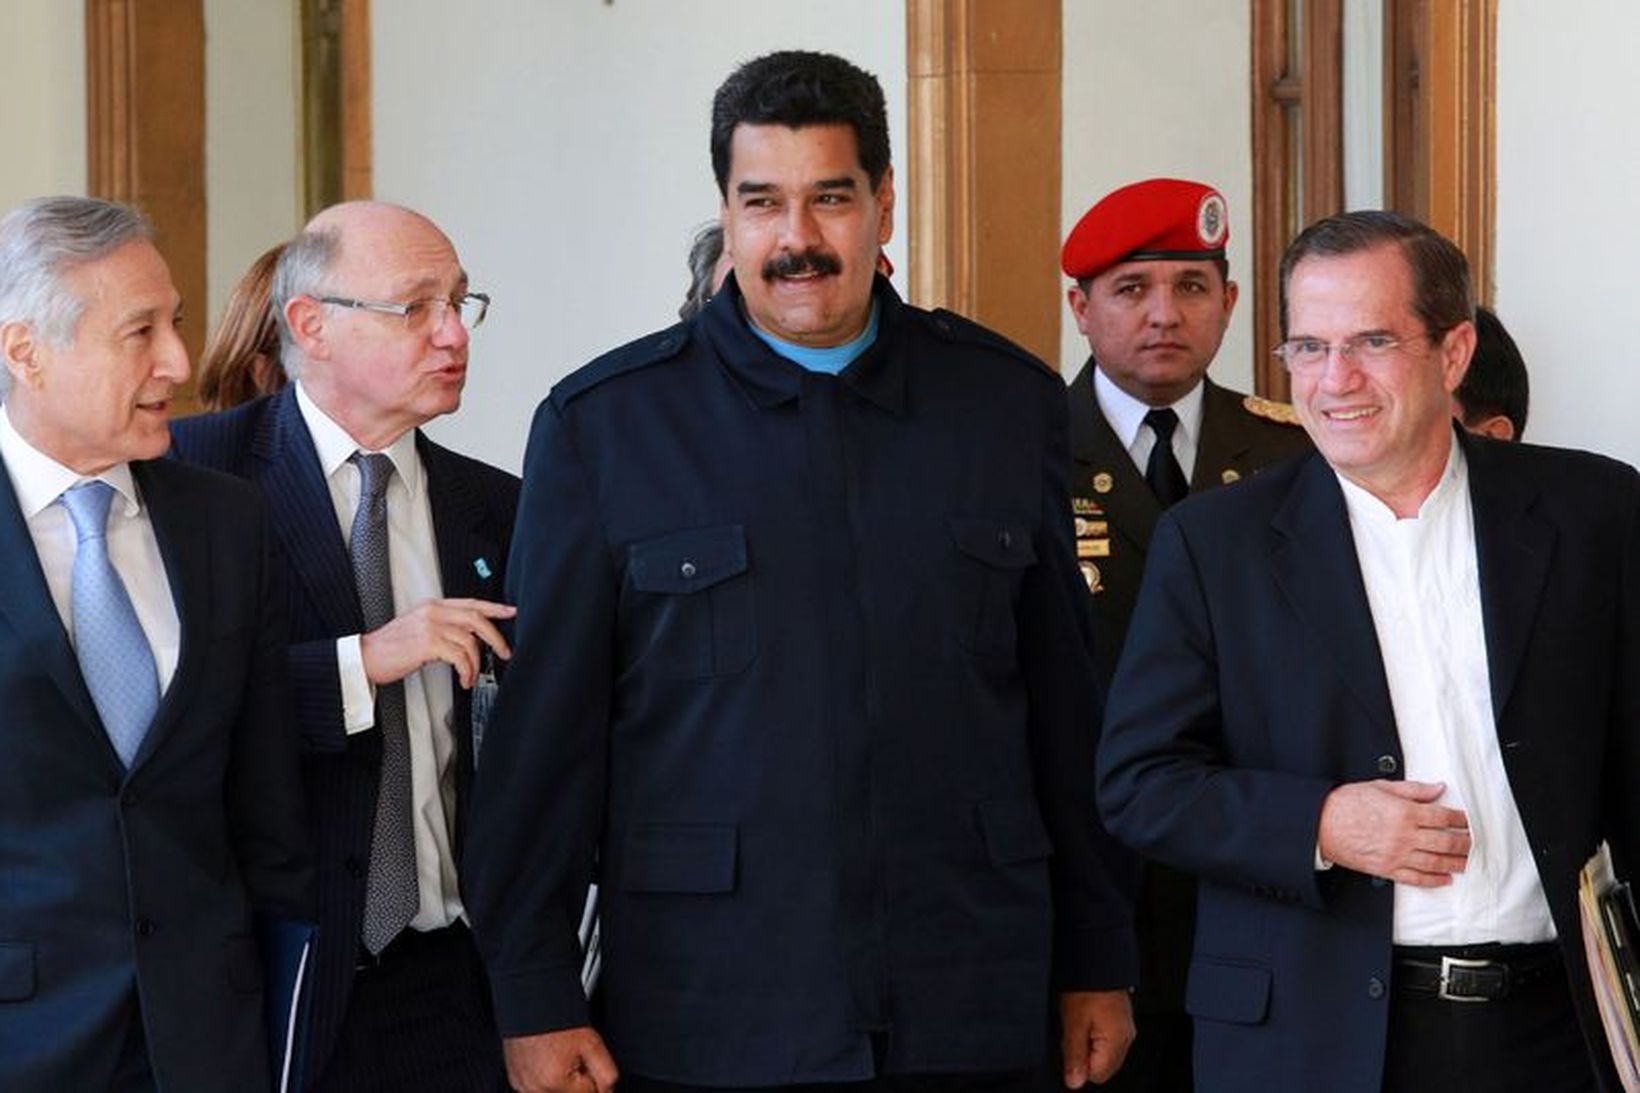 Nicolas Maduro, forseti Venesúela, fyrir miðju.